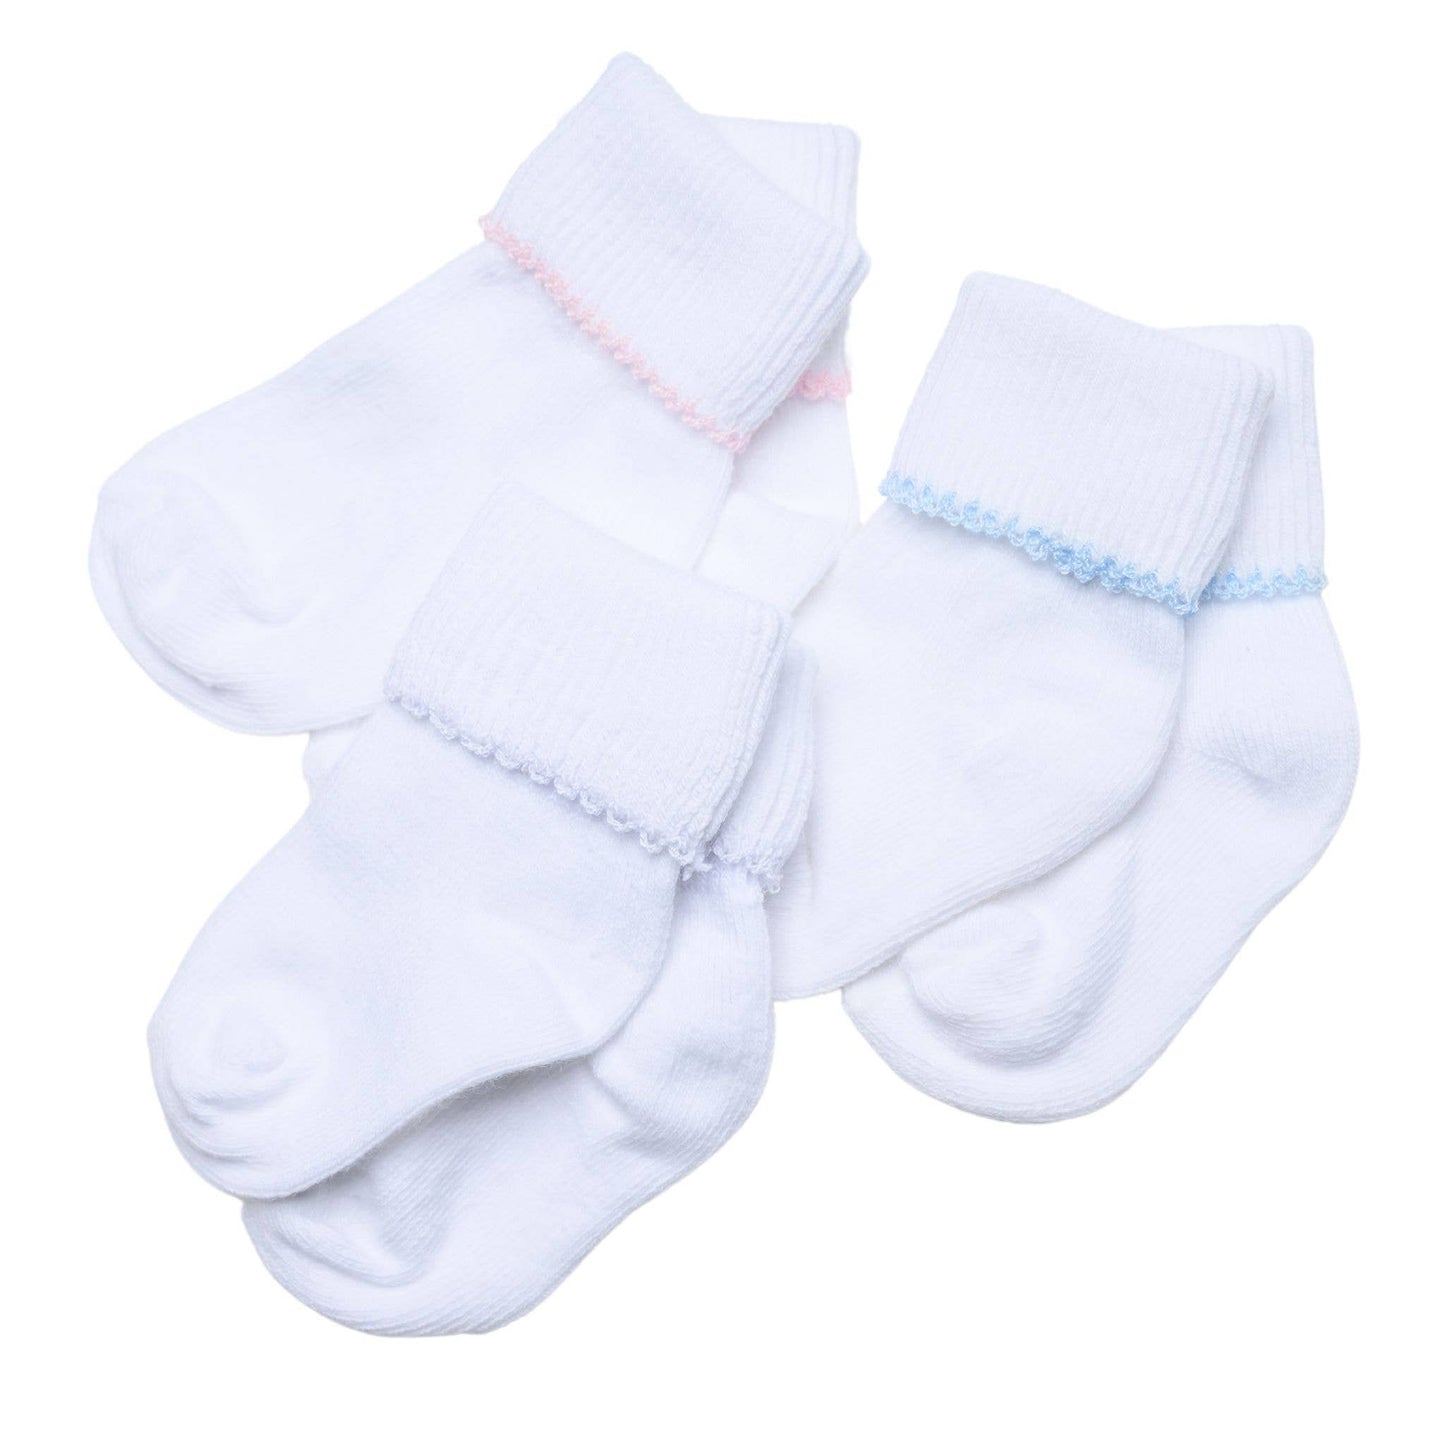 Solid Essentials White Blue Socks